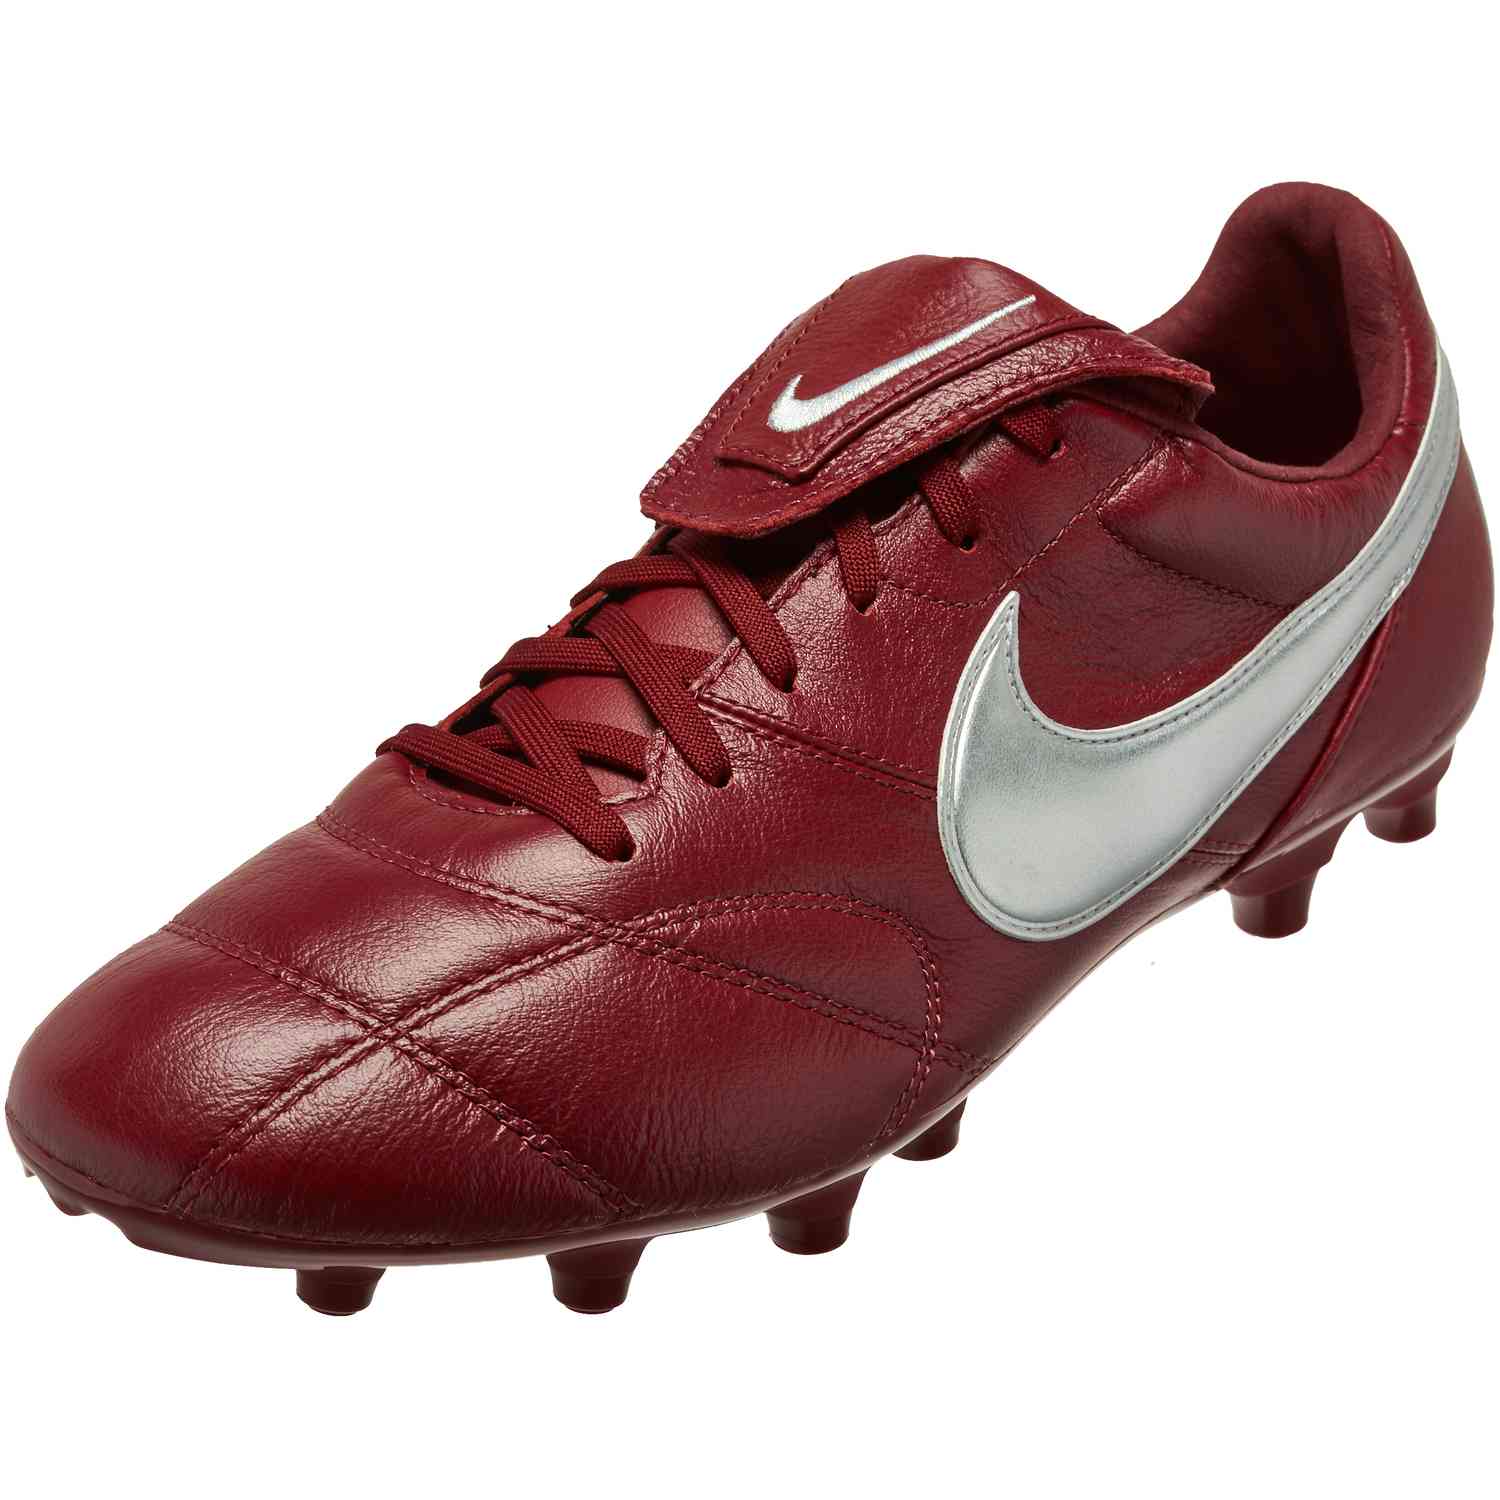 Nike Premier II FG - Team Red/Metallic Silver/Team Red - Soccer Master